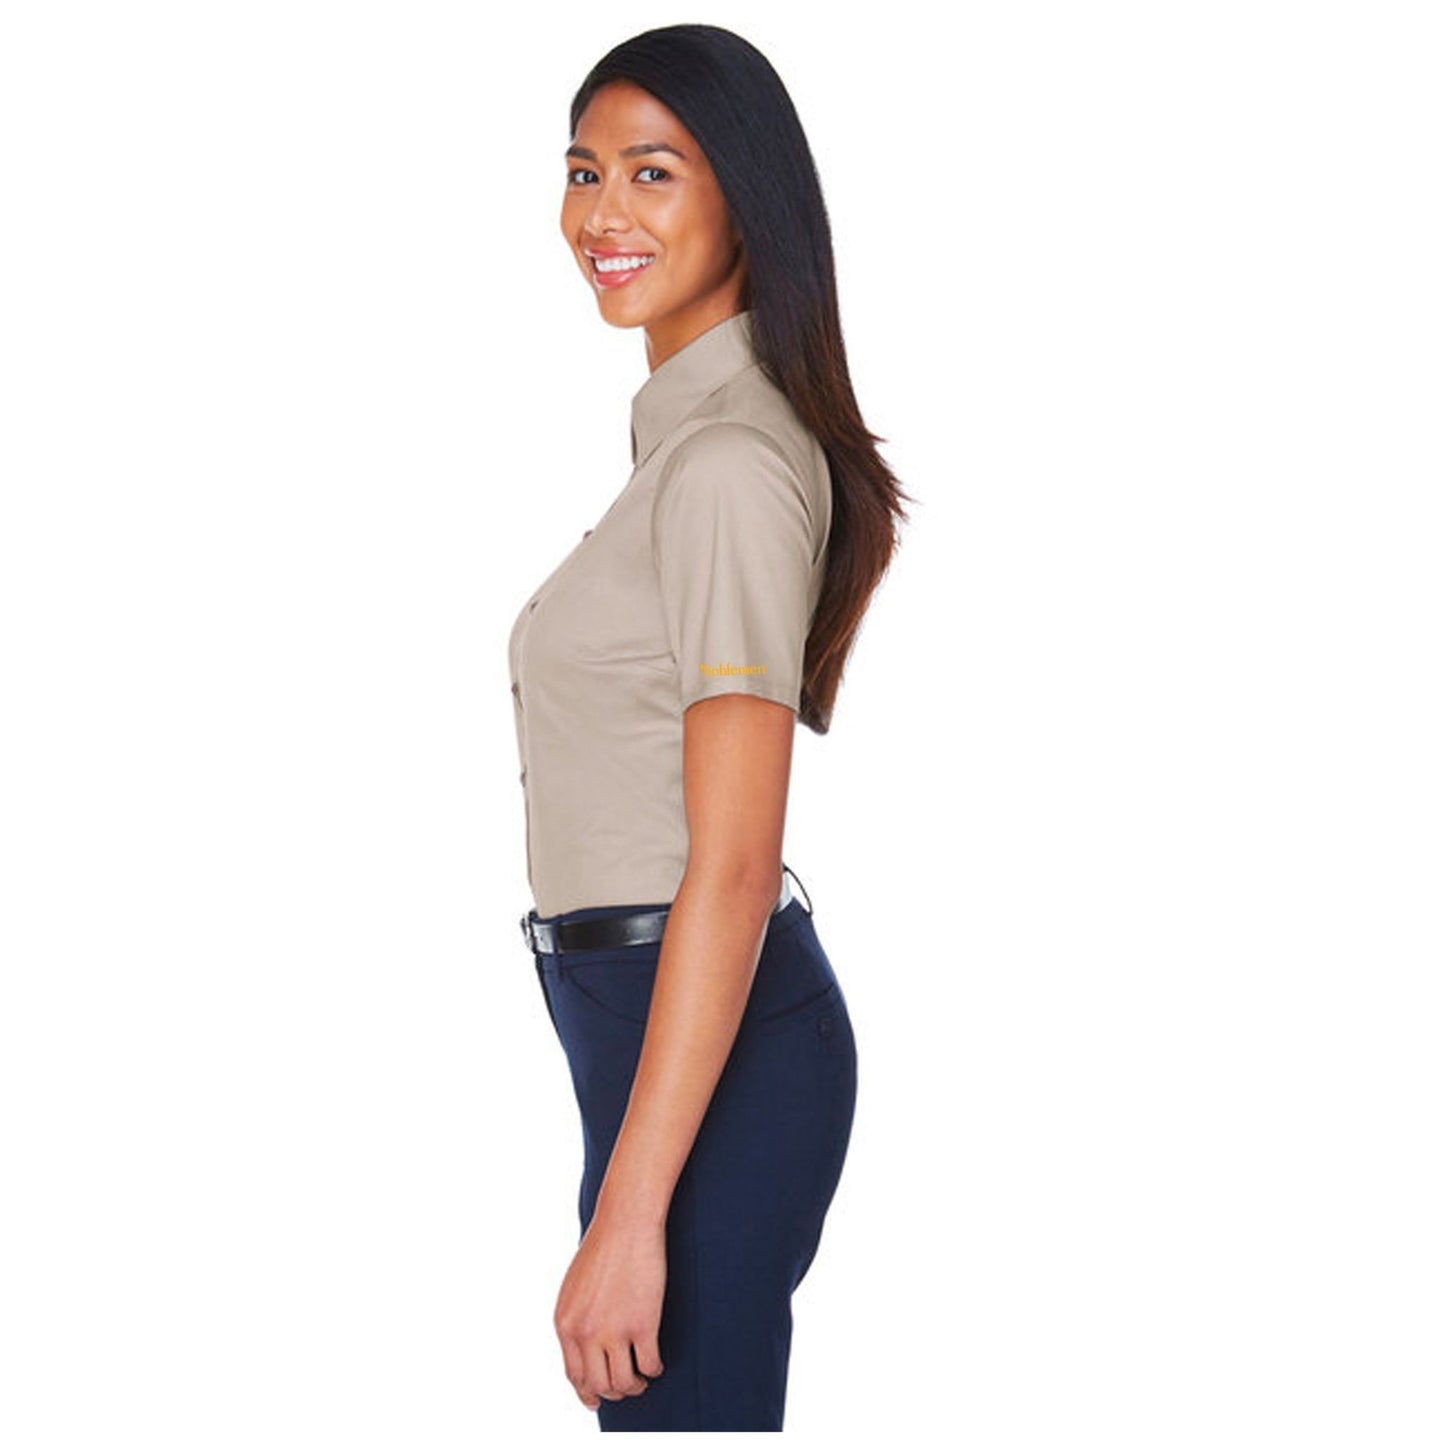 Noblemen - Women's Harriton Twill Short-Sleeve Shirt